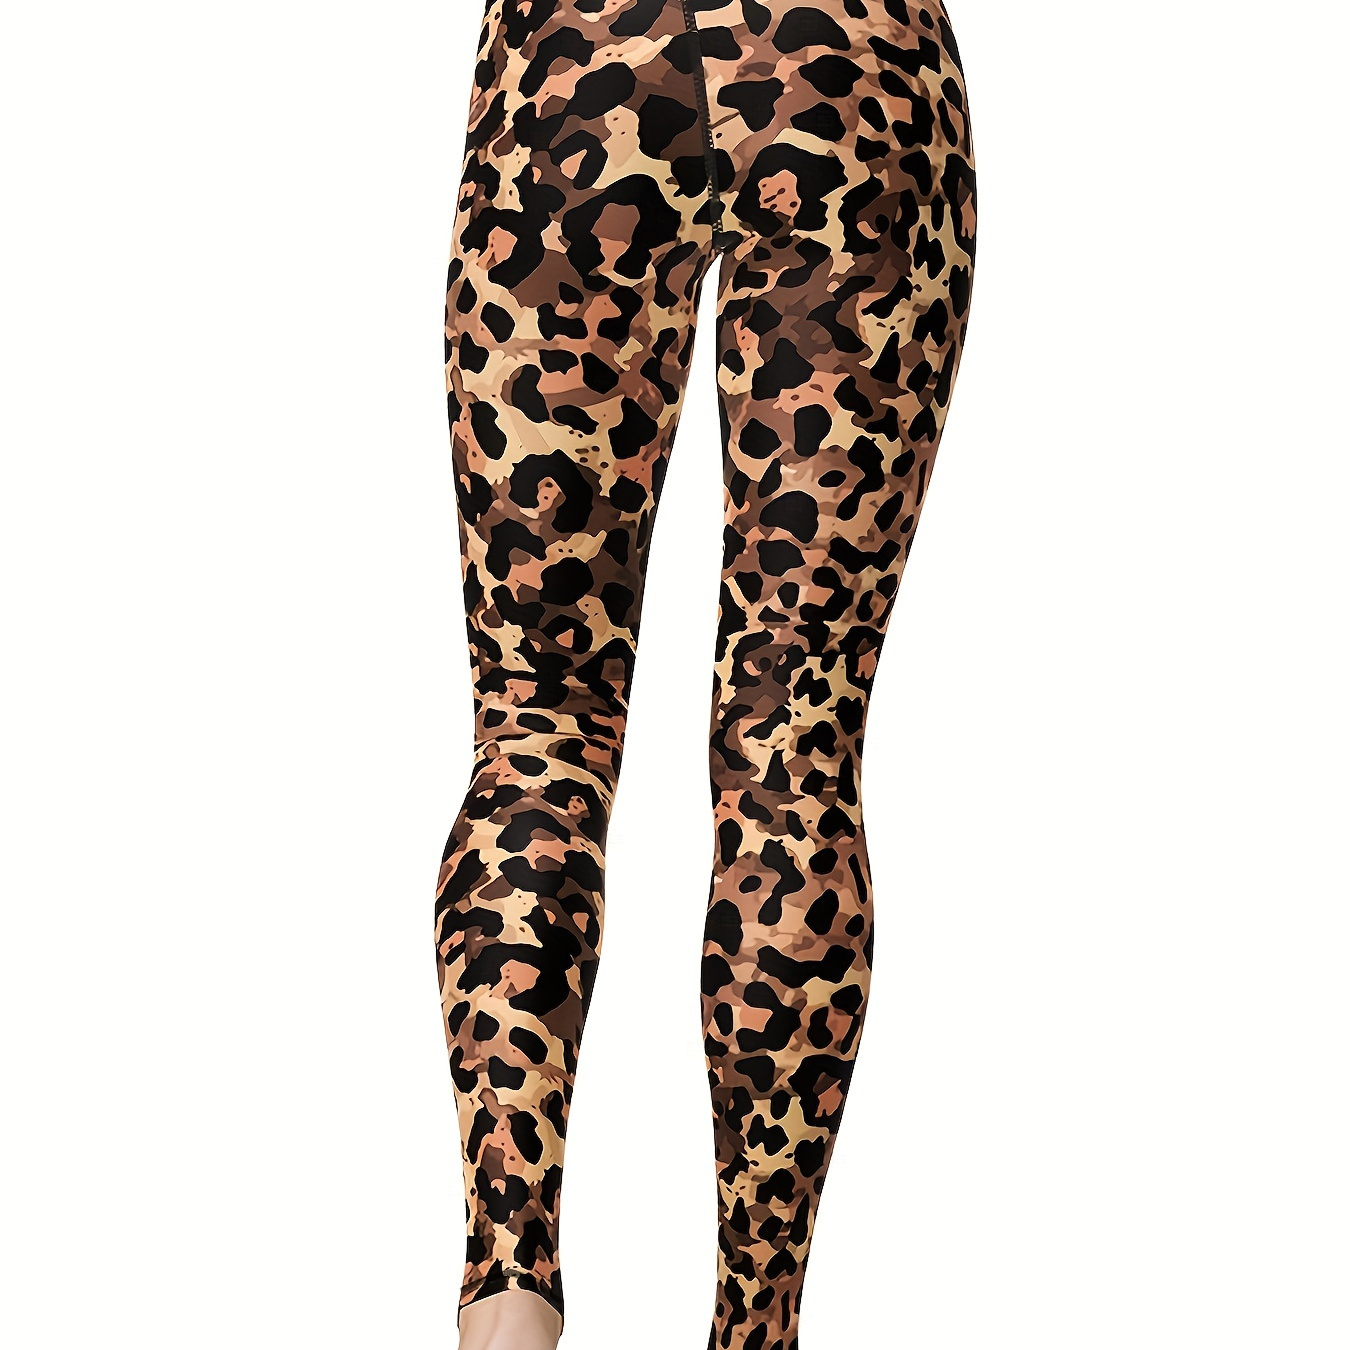 Leopard Print Running Workout Leggings, High Elastic Slim Fitness Yoga  Pants, Women's Activewear